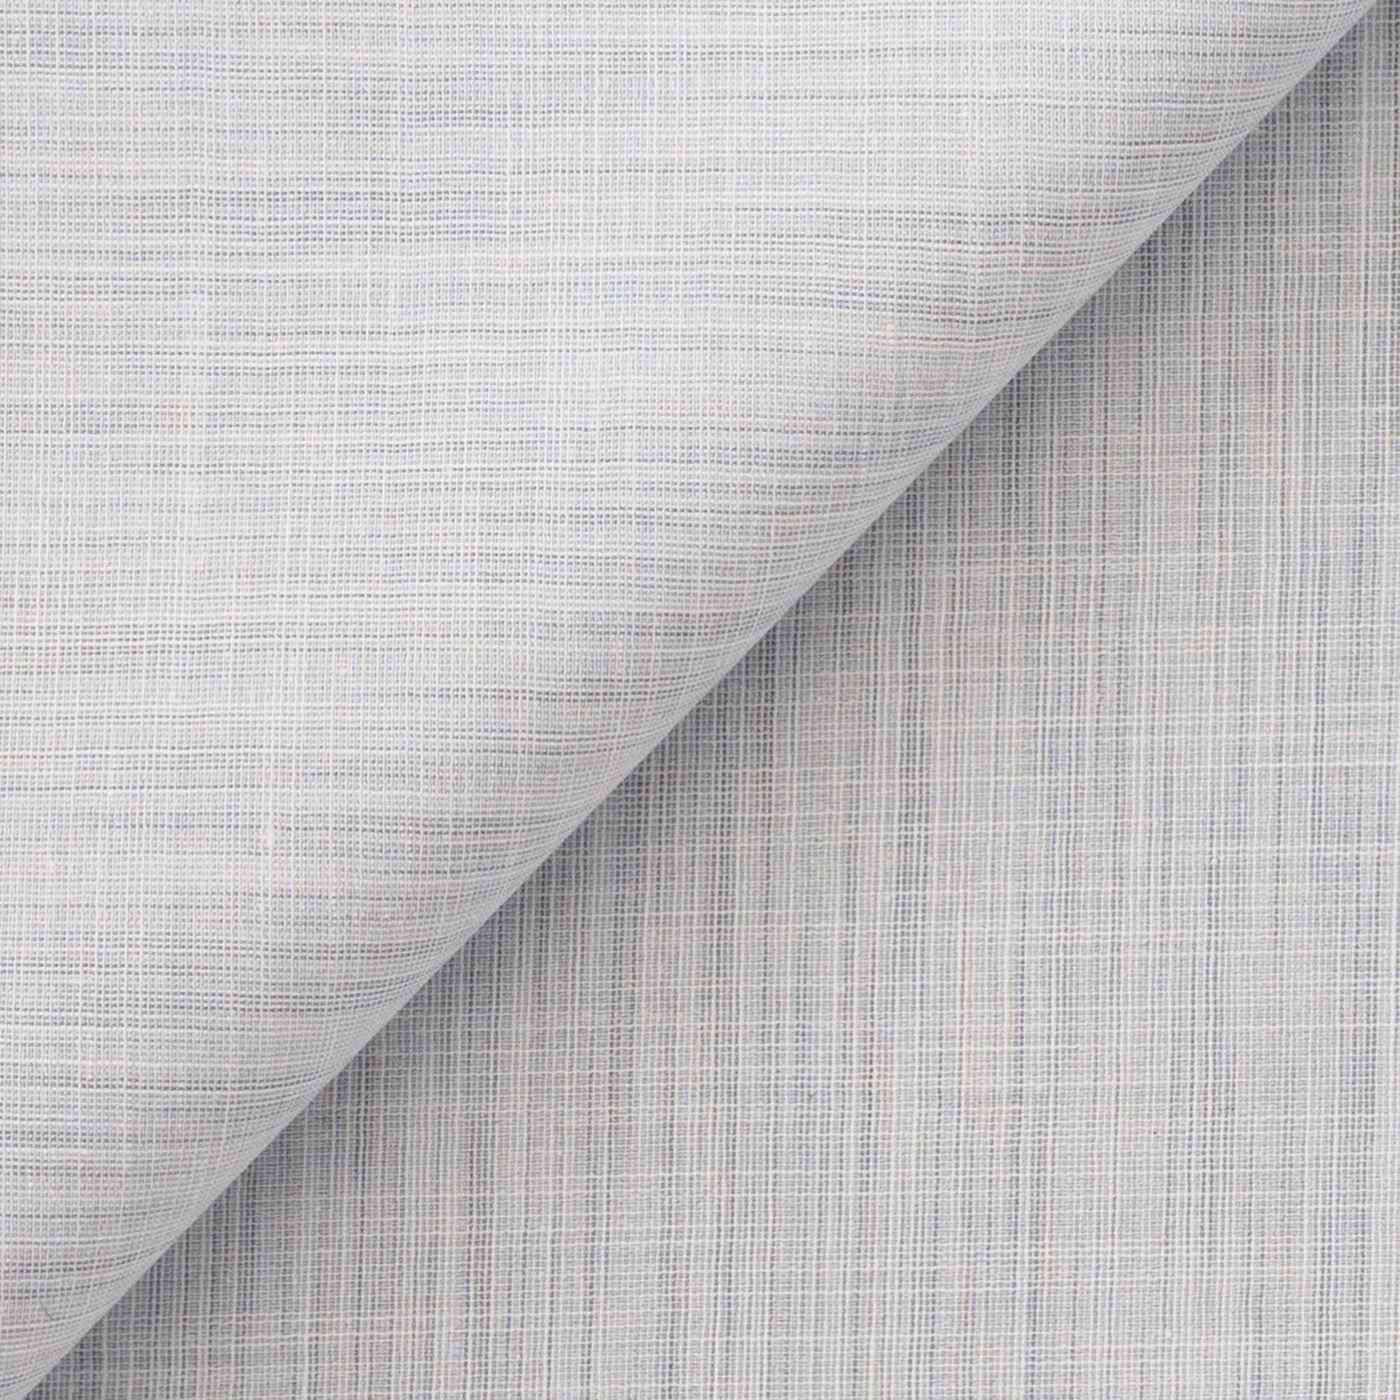 Fabric Pandit Cut Piece (CUT PIECE) Pastel Grey Cotton Yarn Dyed Slubs Men's Shirt Fabric (Width 58 inch)